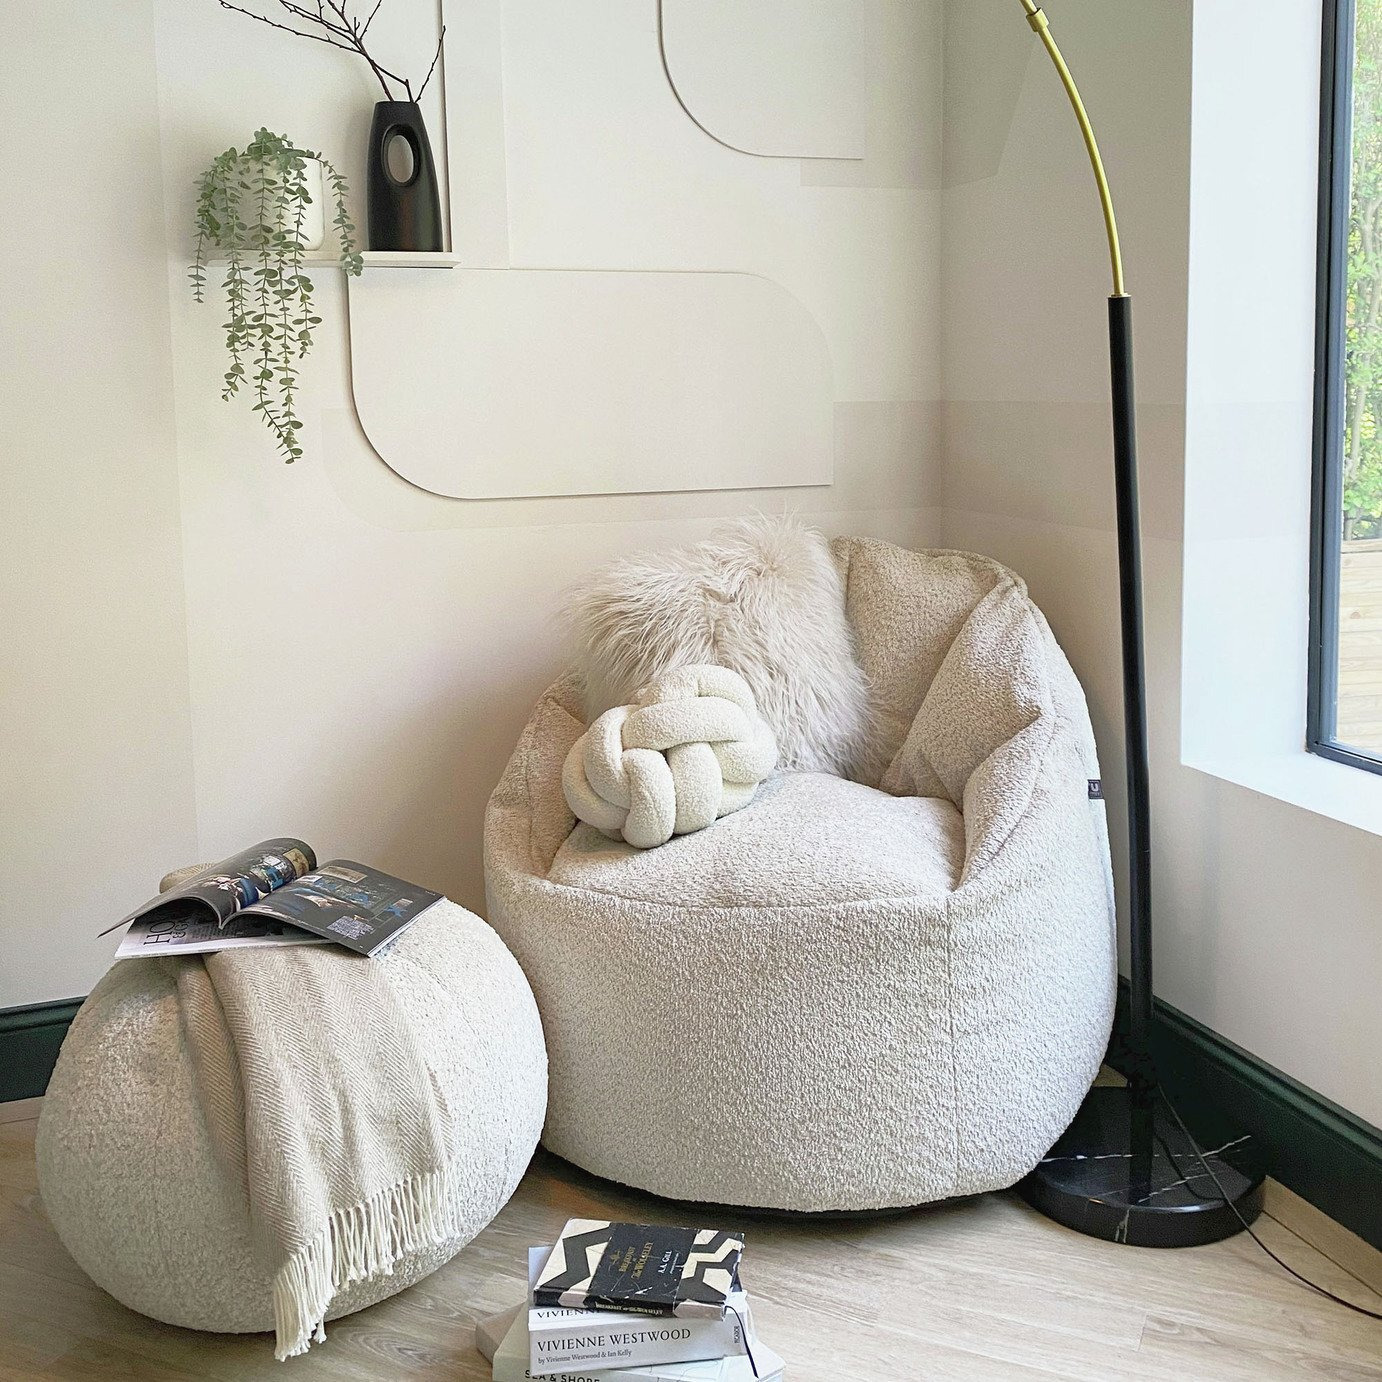 rucomfy Fabric Snug Cinema Bean Bag Chair - Oatmeal - image 1